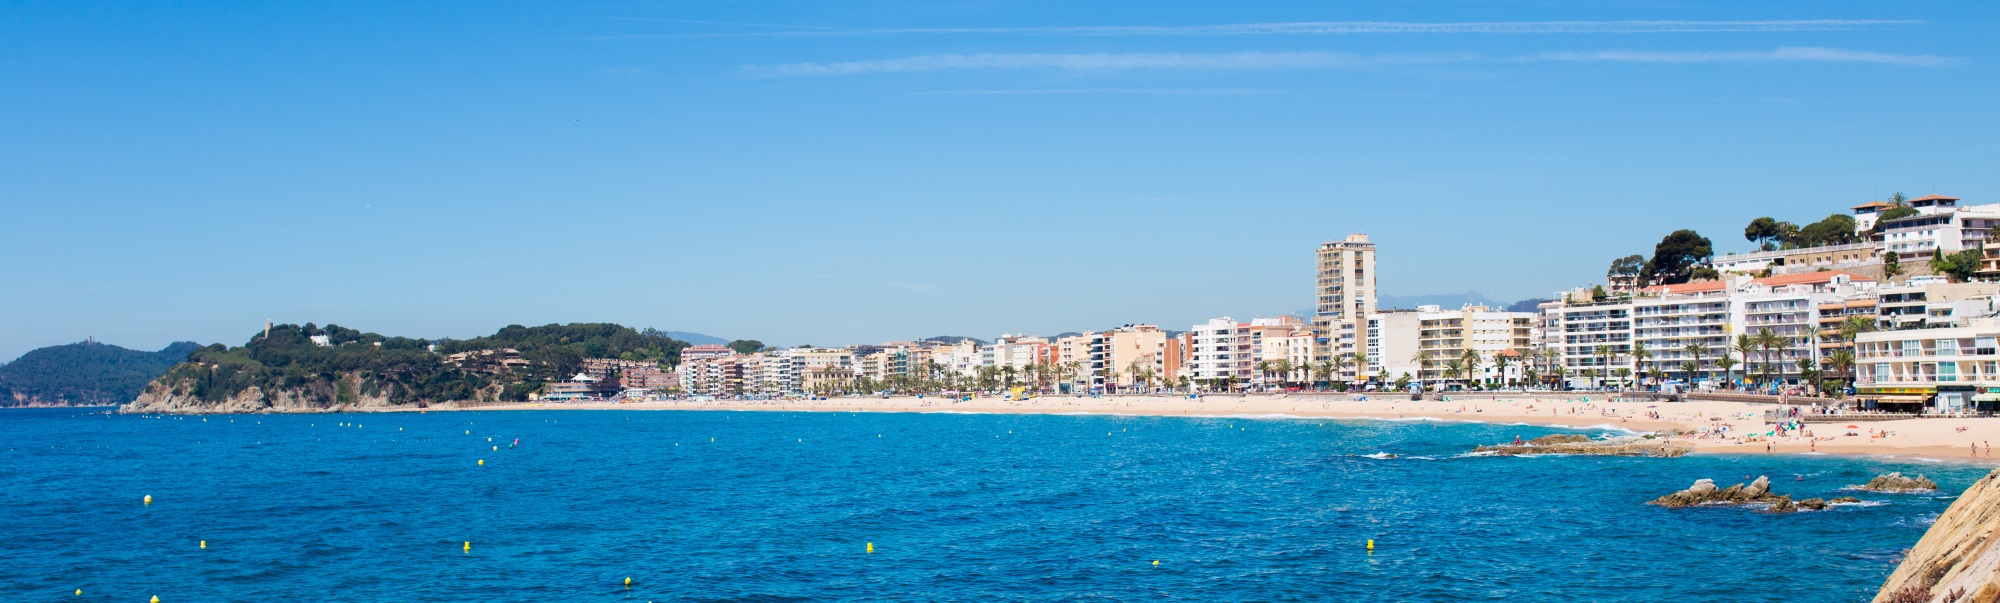 Waterfront of Lloret de Mar. Costa Brava. Spain